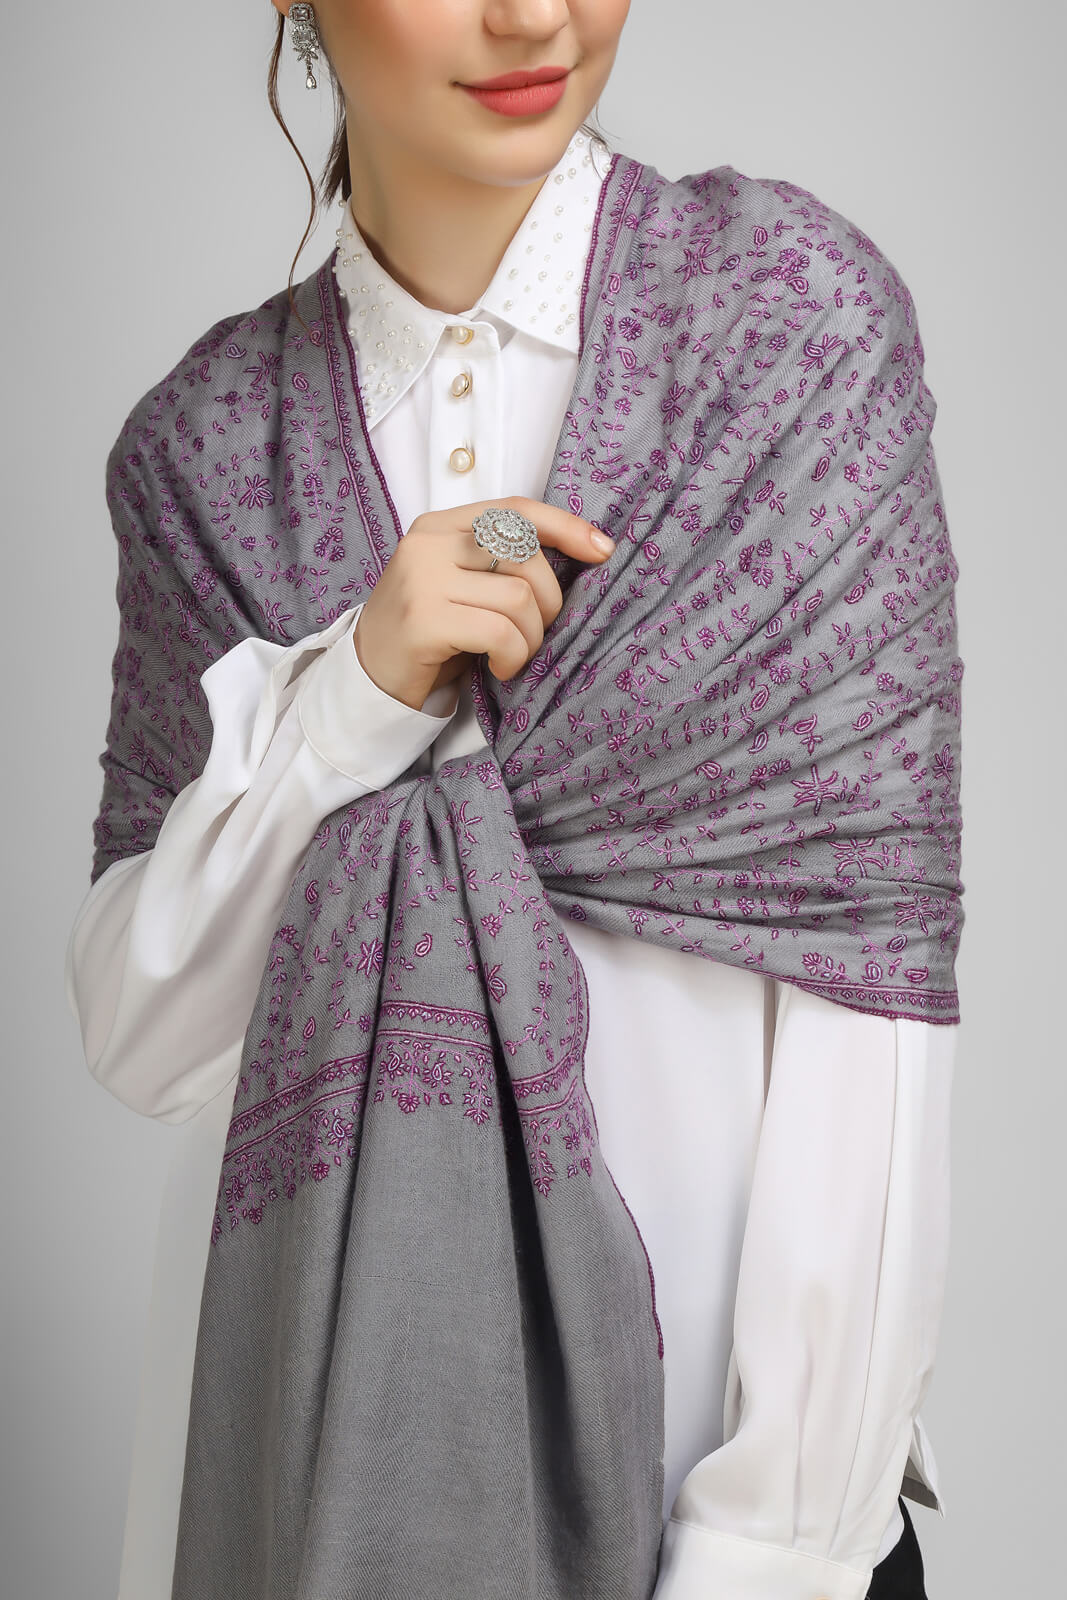 PASHMINA EMBROIDERY STOLE - Gray Pashmina Jaldaar stole, featuring regal purple embroidery and Sozni detailing - We deliver to United States, China, Japan, Germany, United Kingdom, France, Canada, South Korea, Dubai, Kuwait